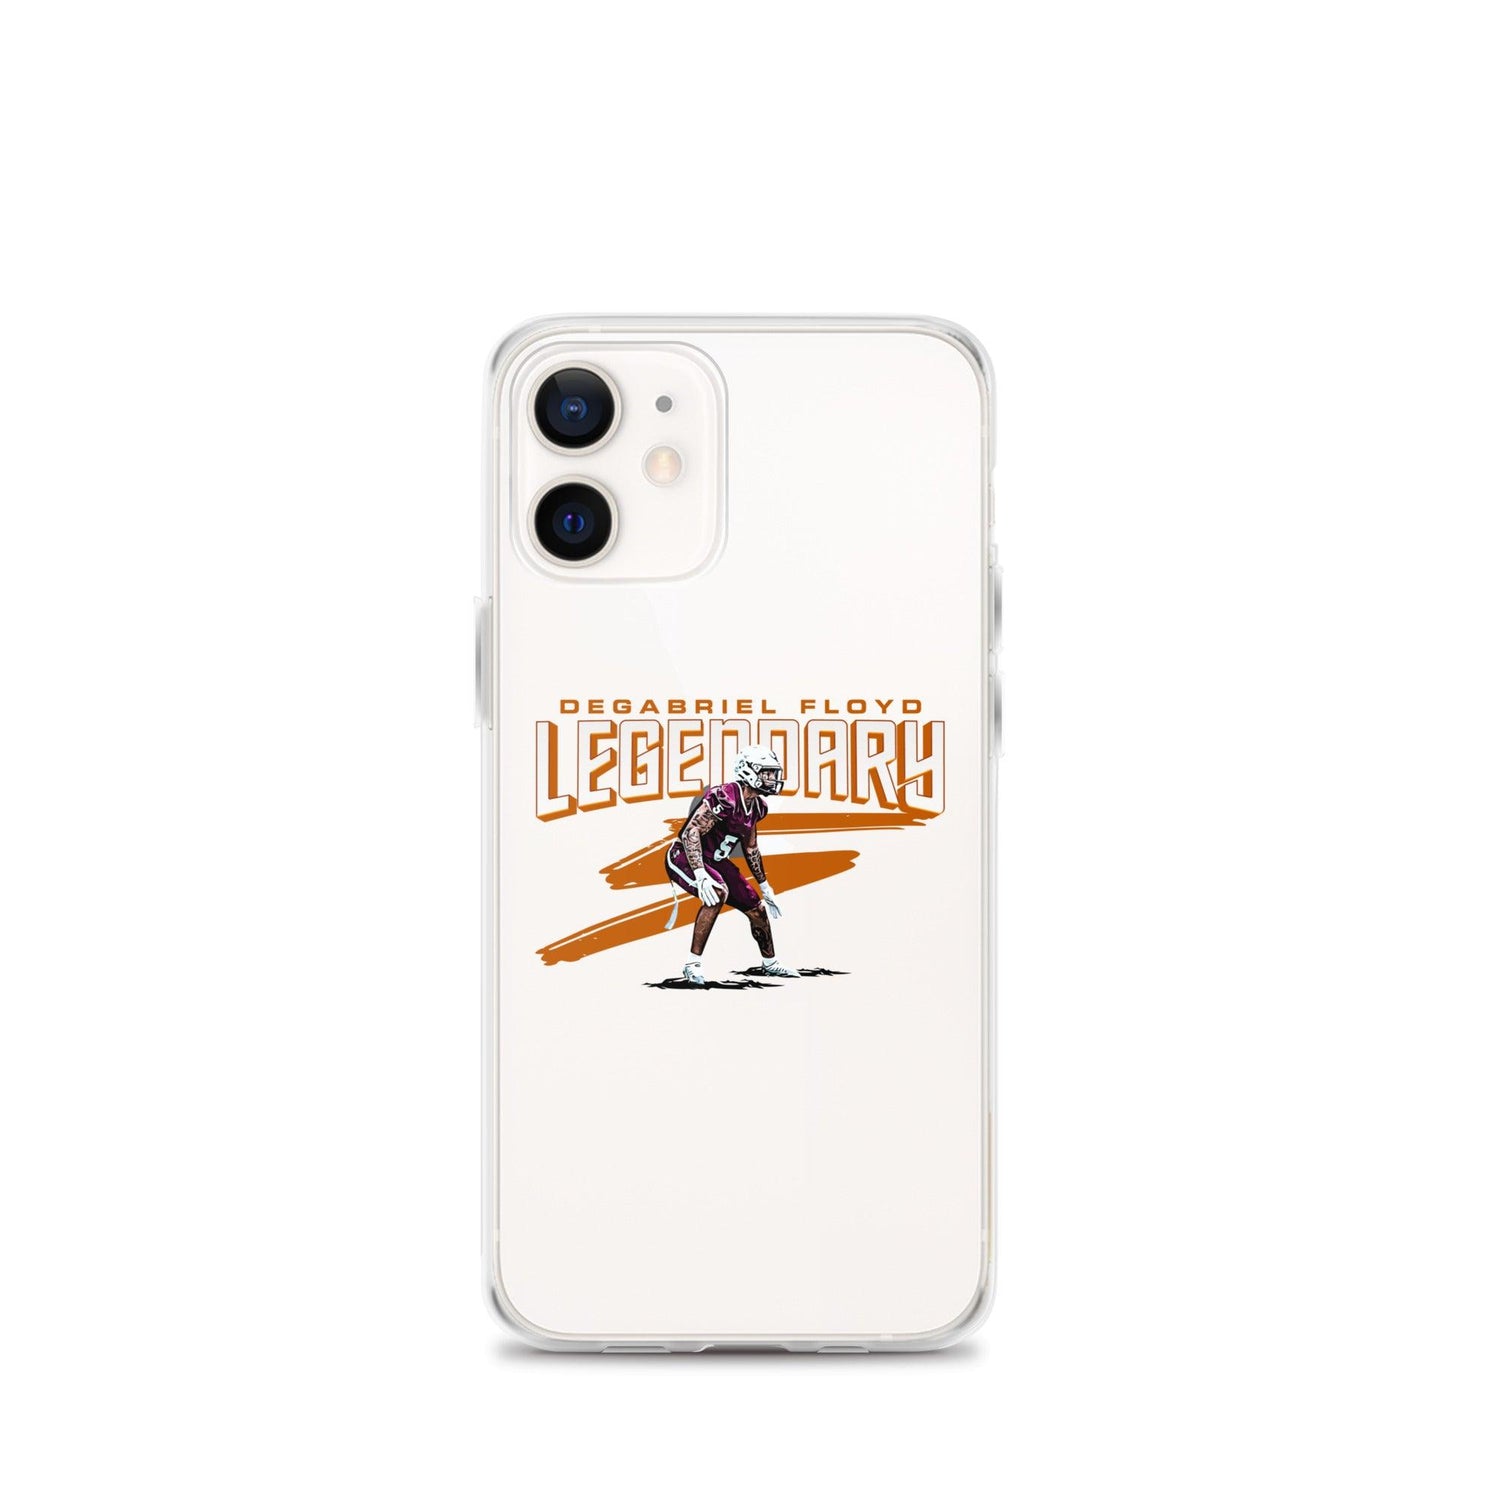 DeGabriel Floyd "Legendary" iPhone Case - Fan Arch